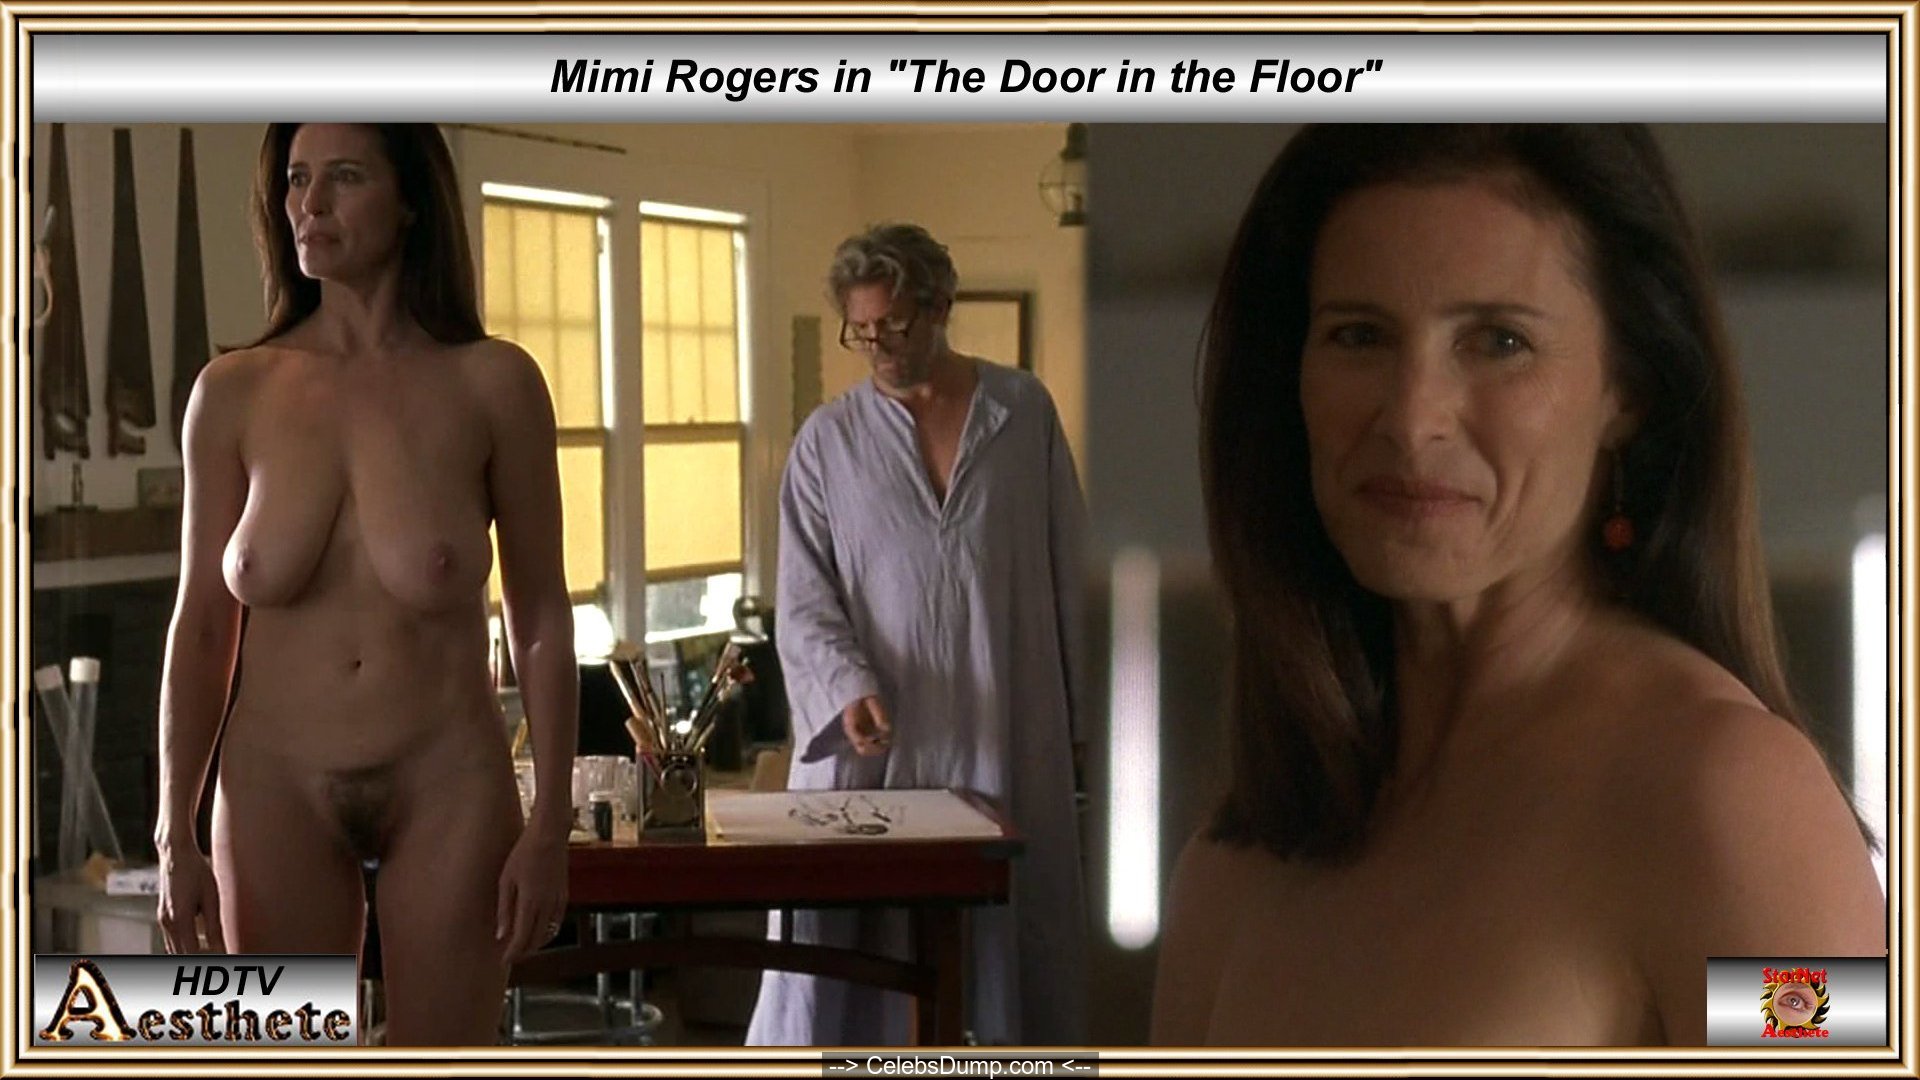 Mimi rodgers naked 👉 👌 Mimi rogers nude photo 🔥 Mimi Rogers 